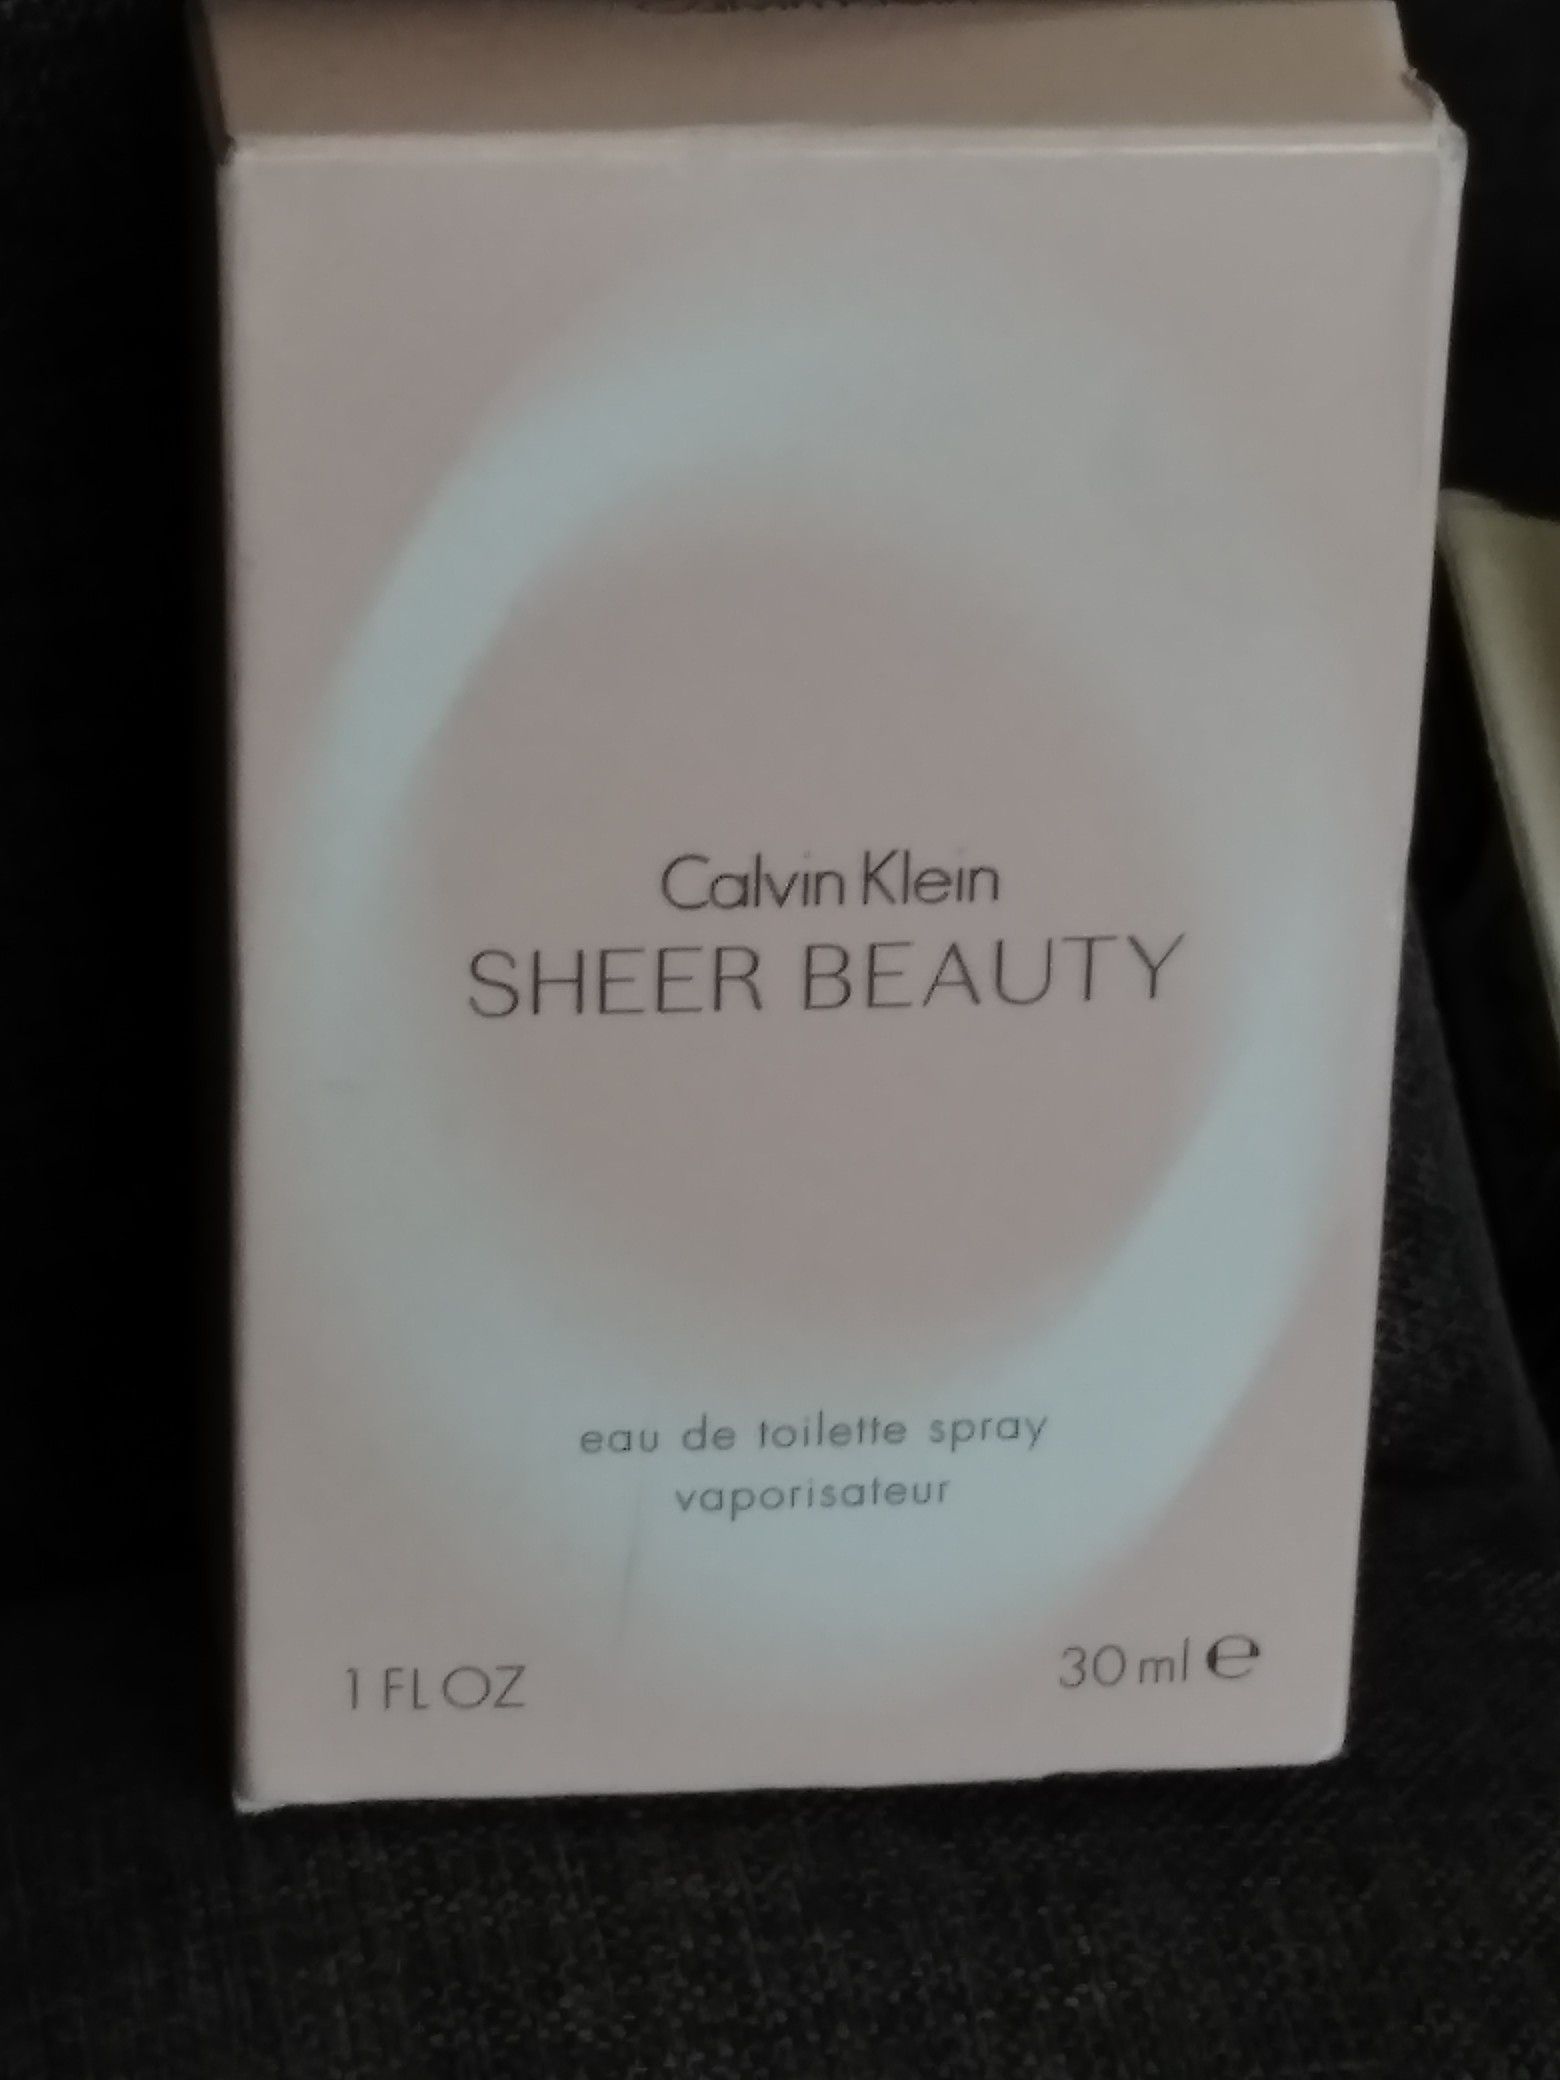 Sheer Beauty by Calvin Klein